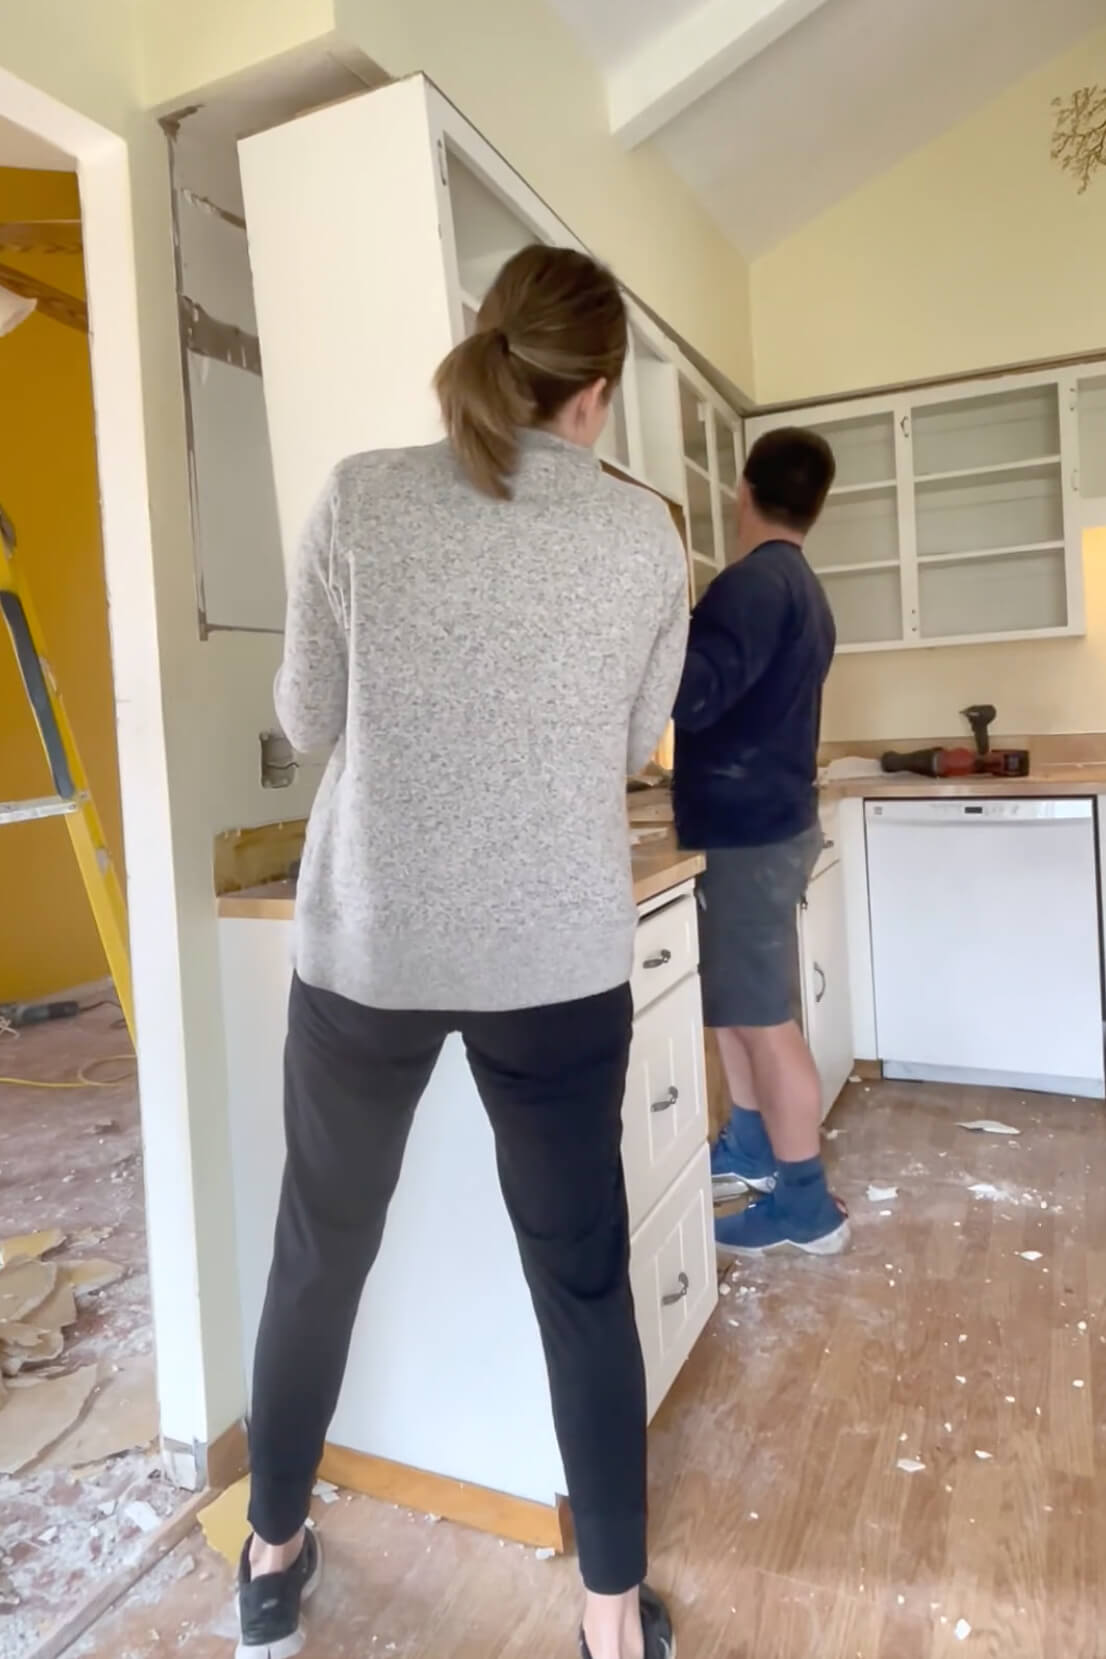 Removing old cabinets during DIY kitchen remodel.